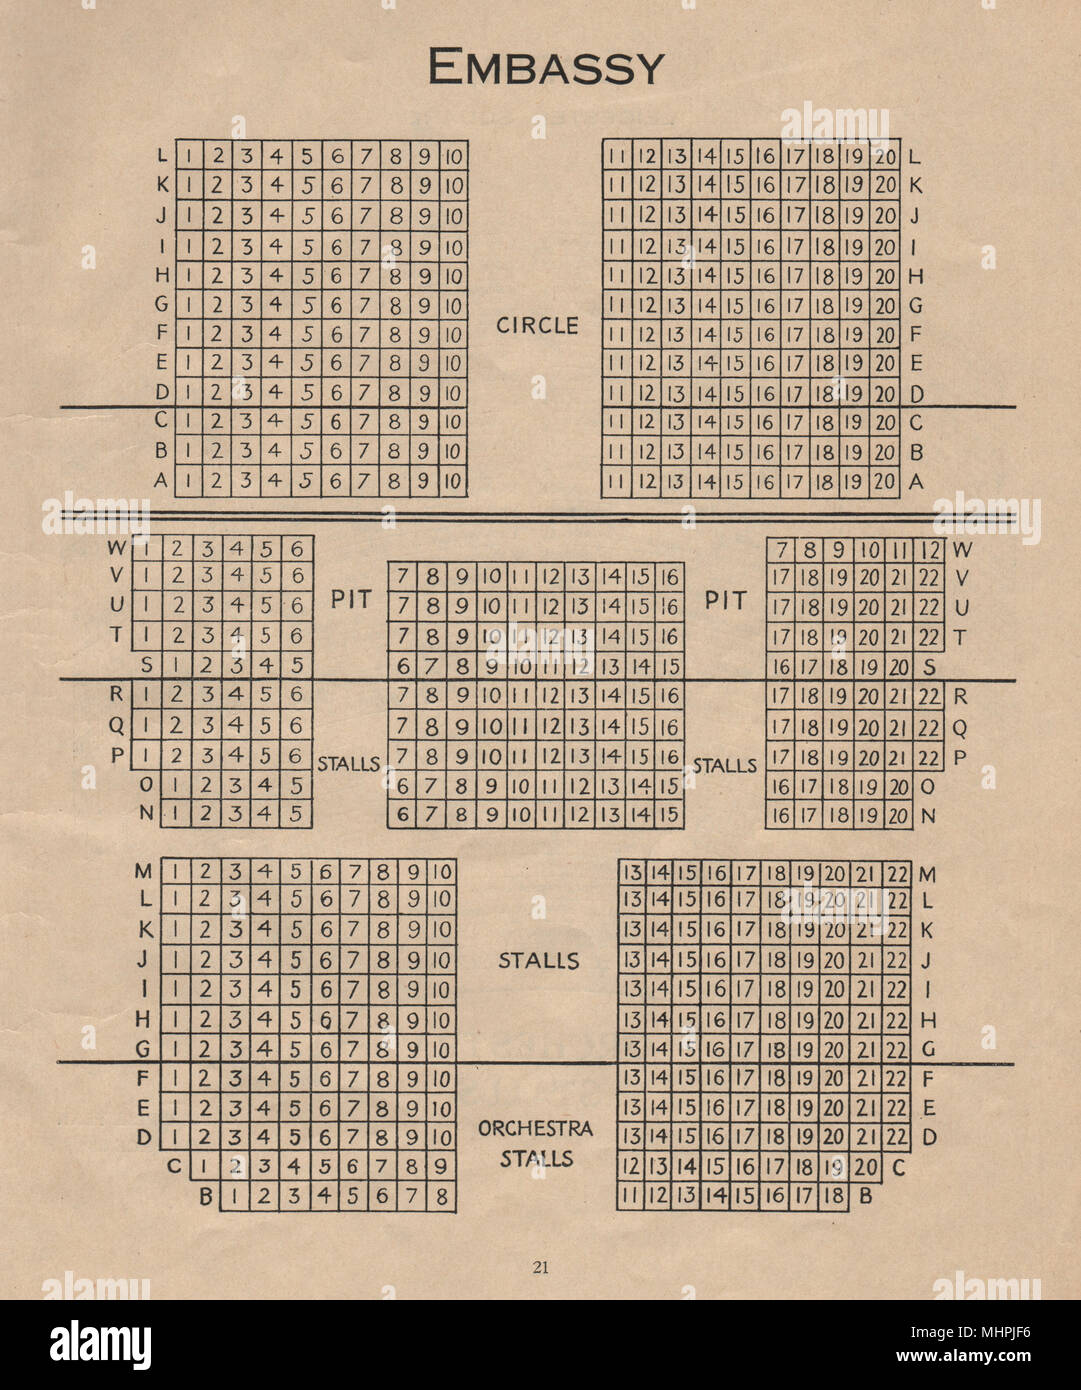 Avon Theatre Stratford Seating Chart